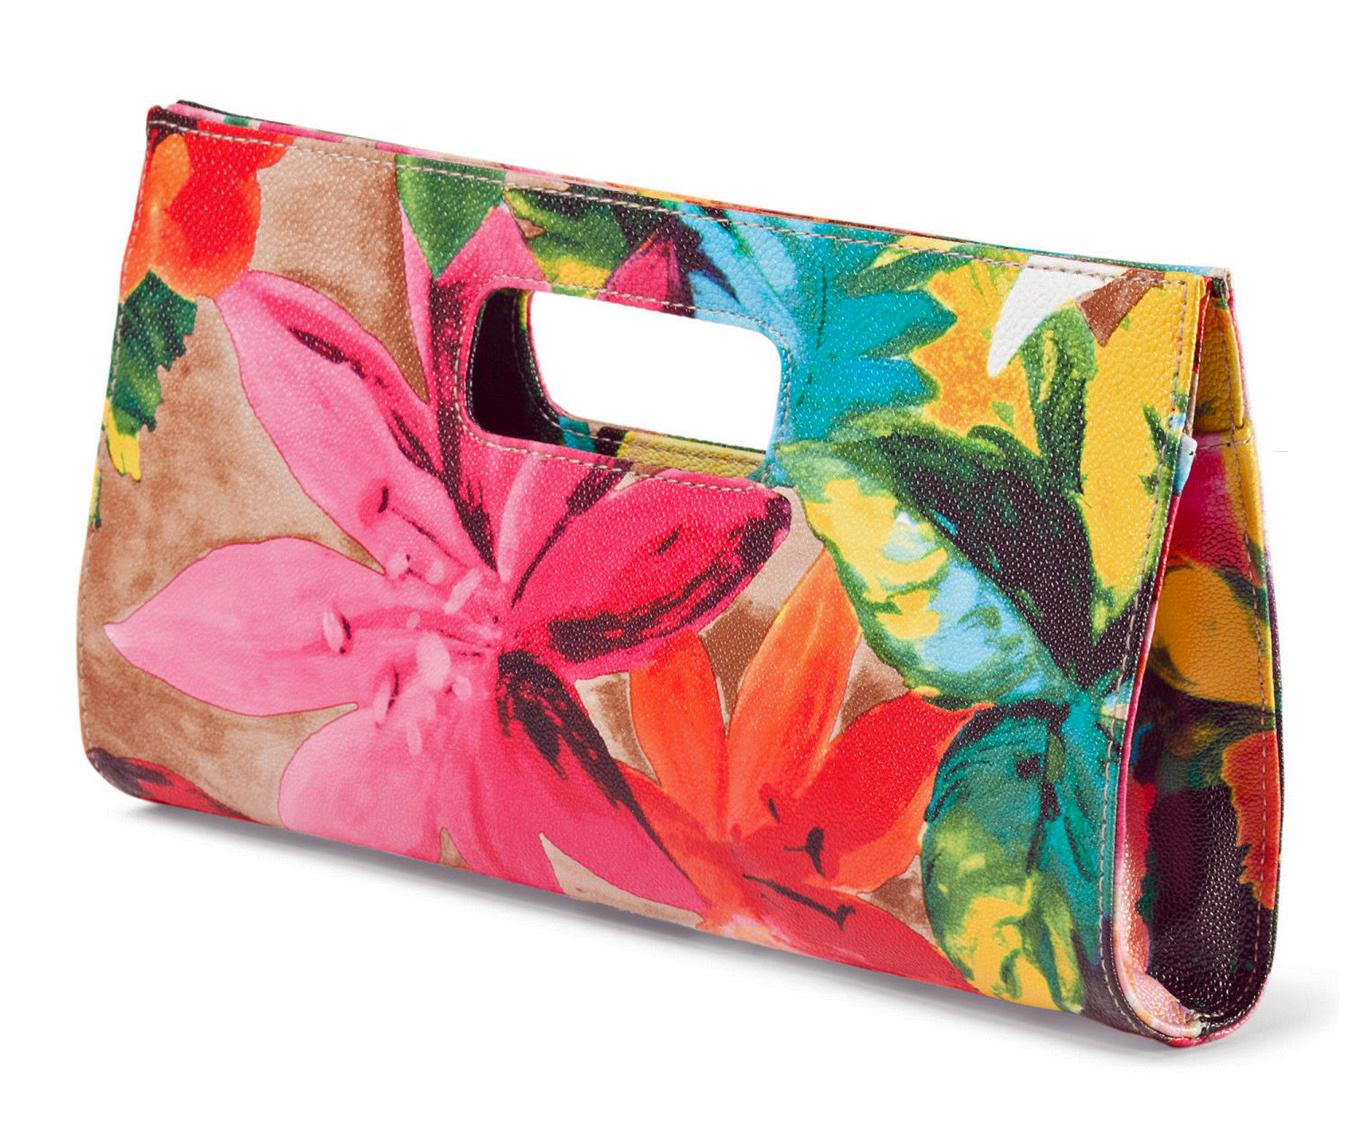 Chateau Tropical Floral Print Vegan Leather Clutch Bag Handbag Purse • NEW | eBay